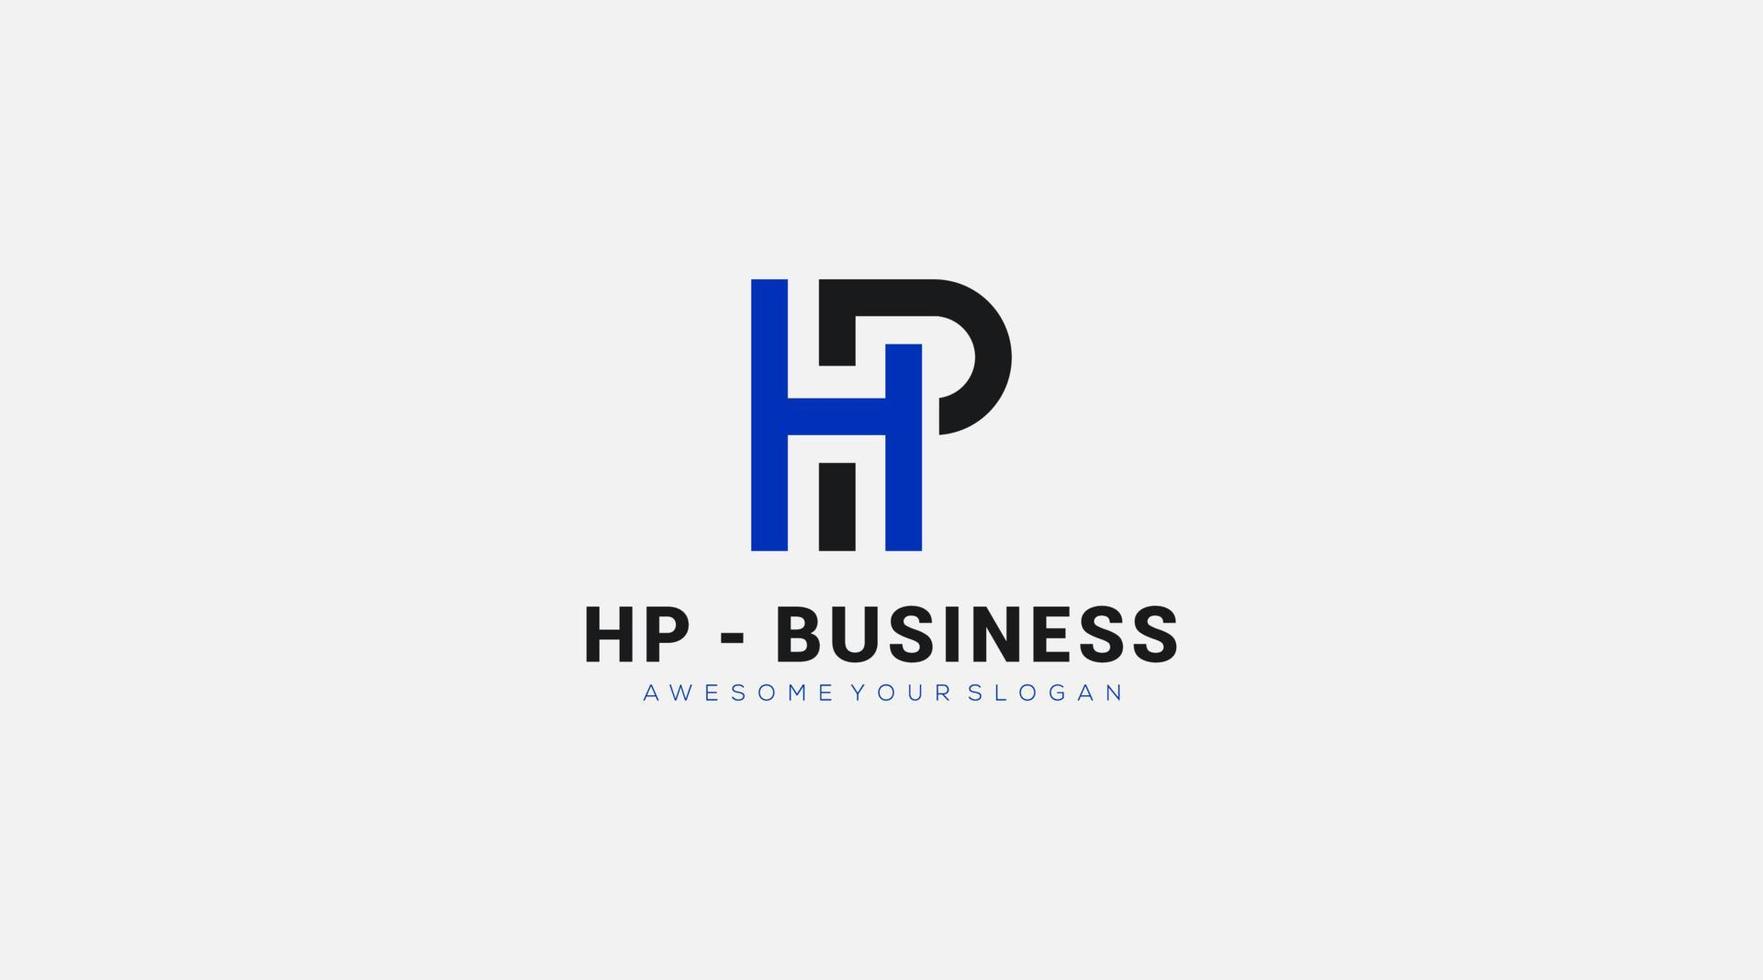 Letter HP PH business vector logo design icon illustration